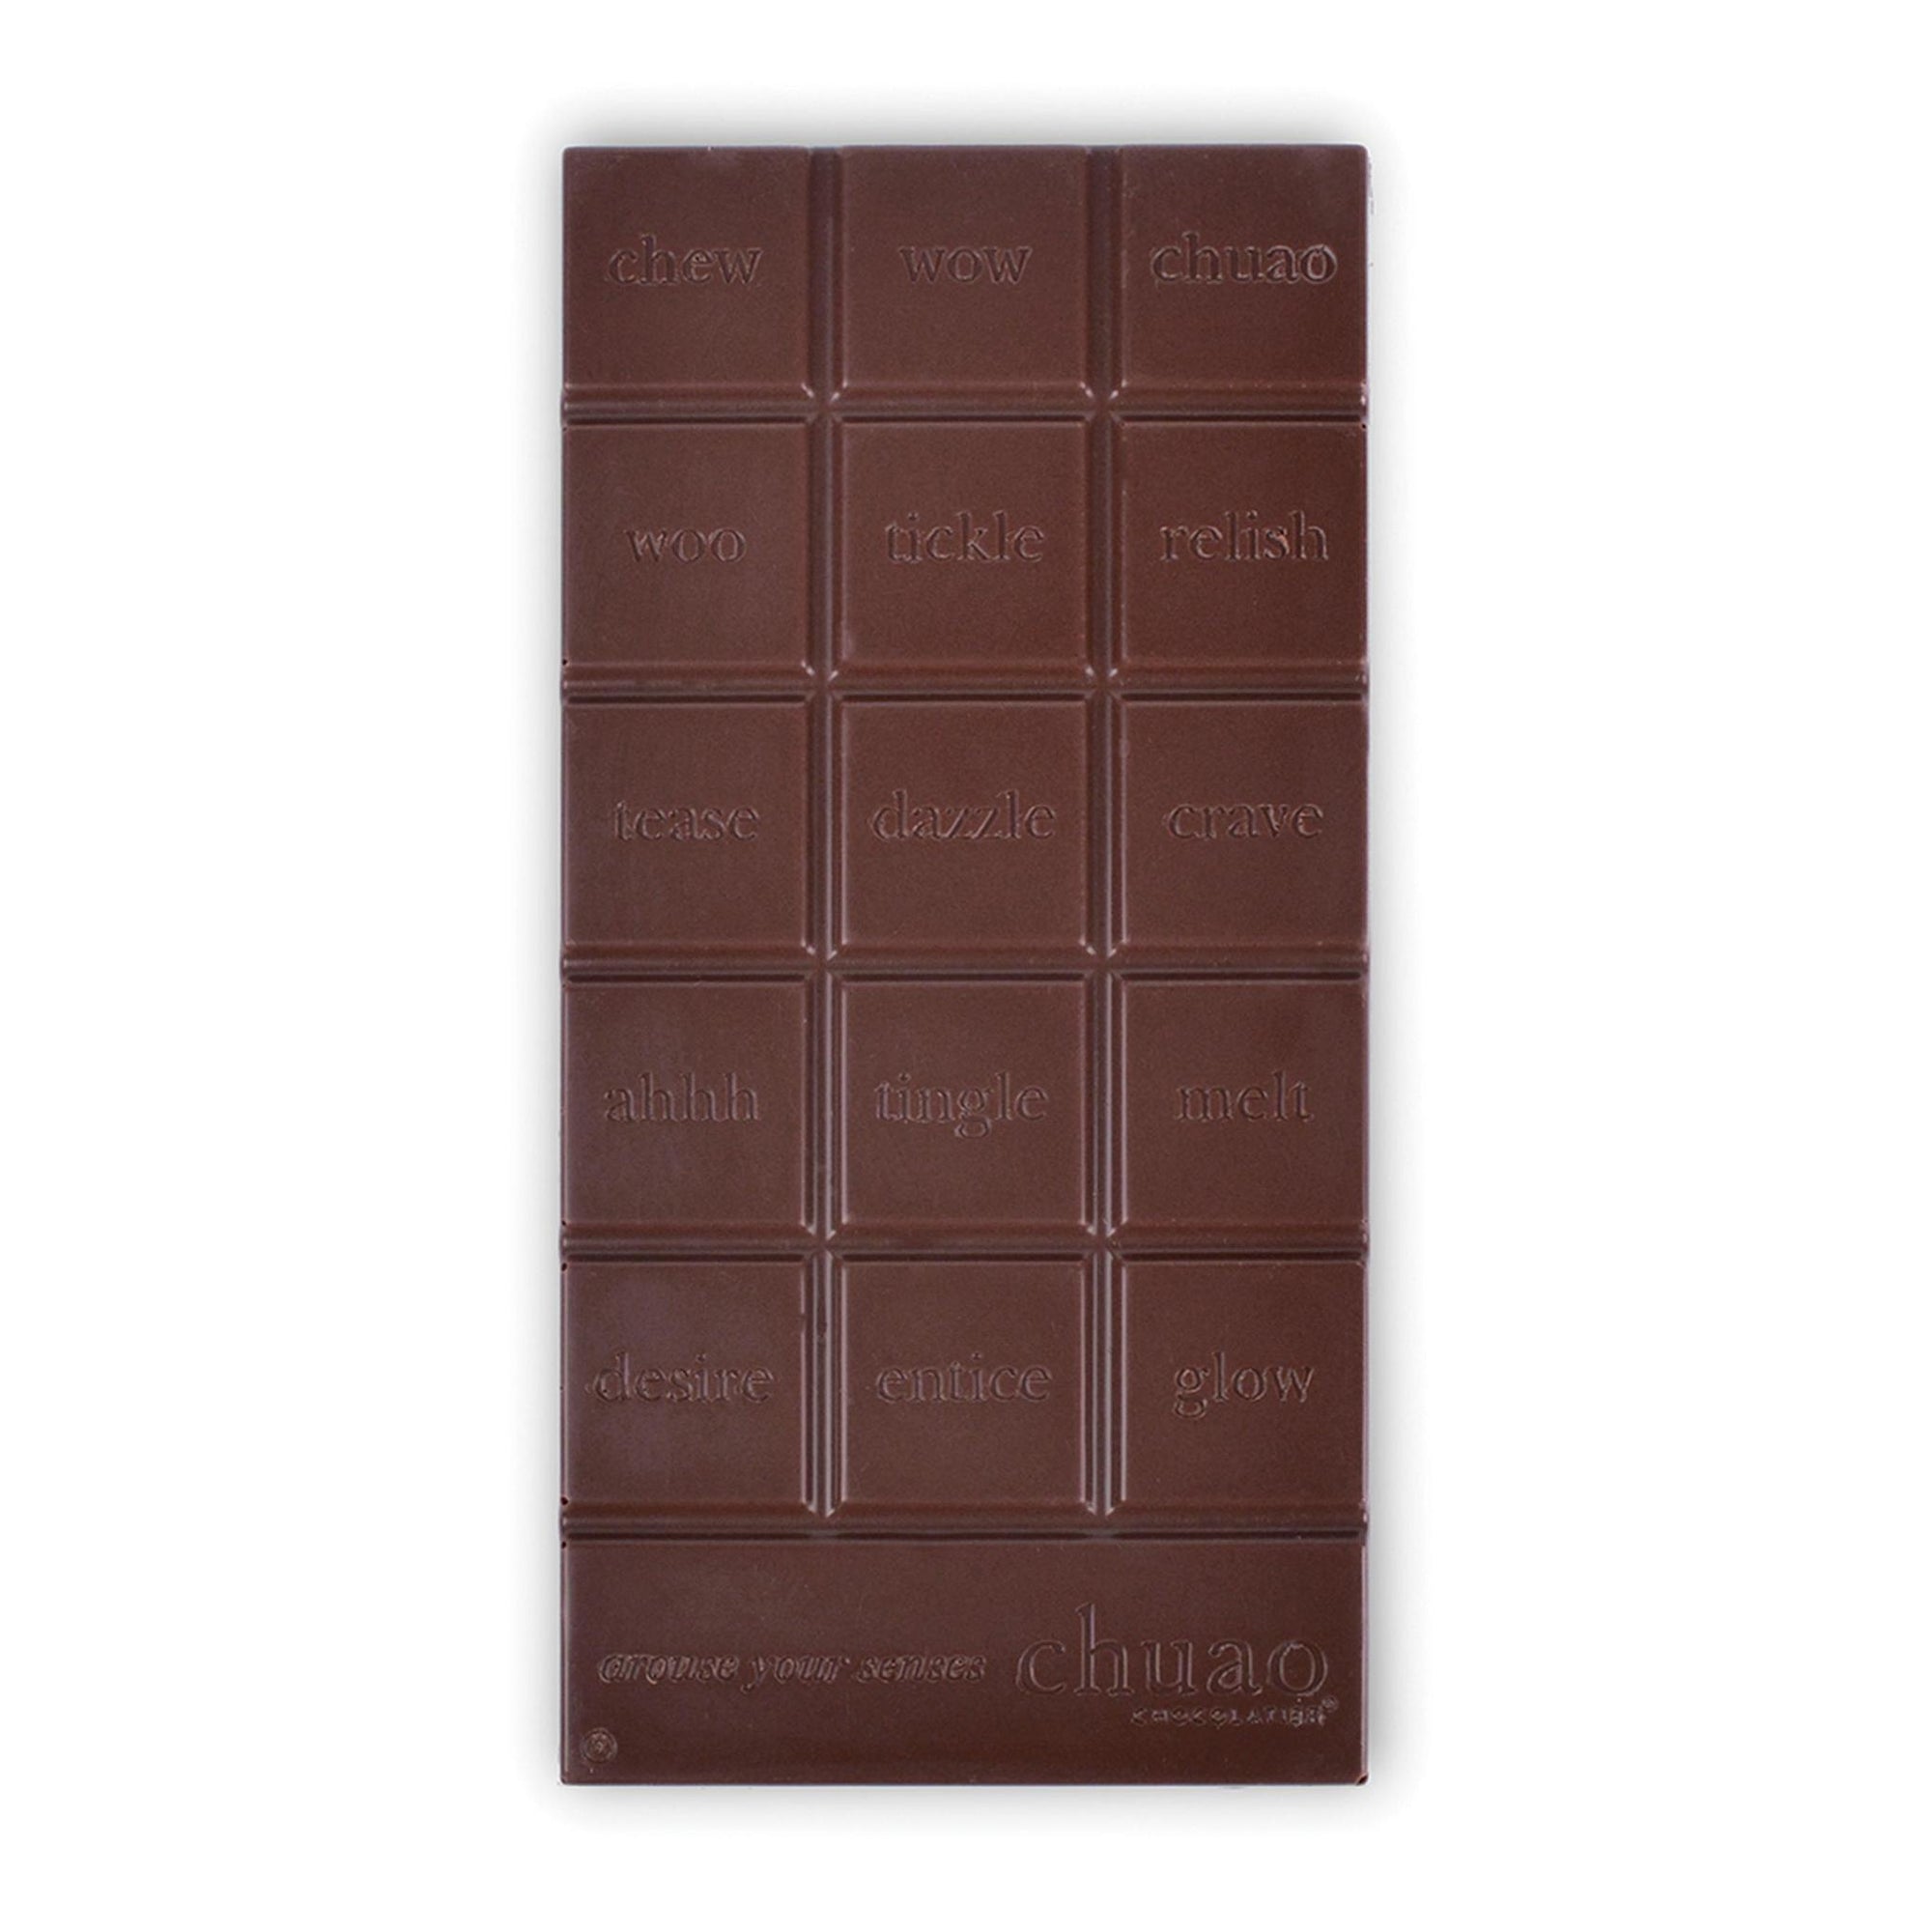 Chuao Chocolatier For the Love of Peppermint - Signature Chocolate Bar